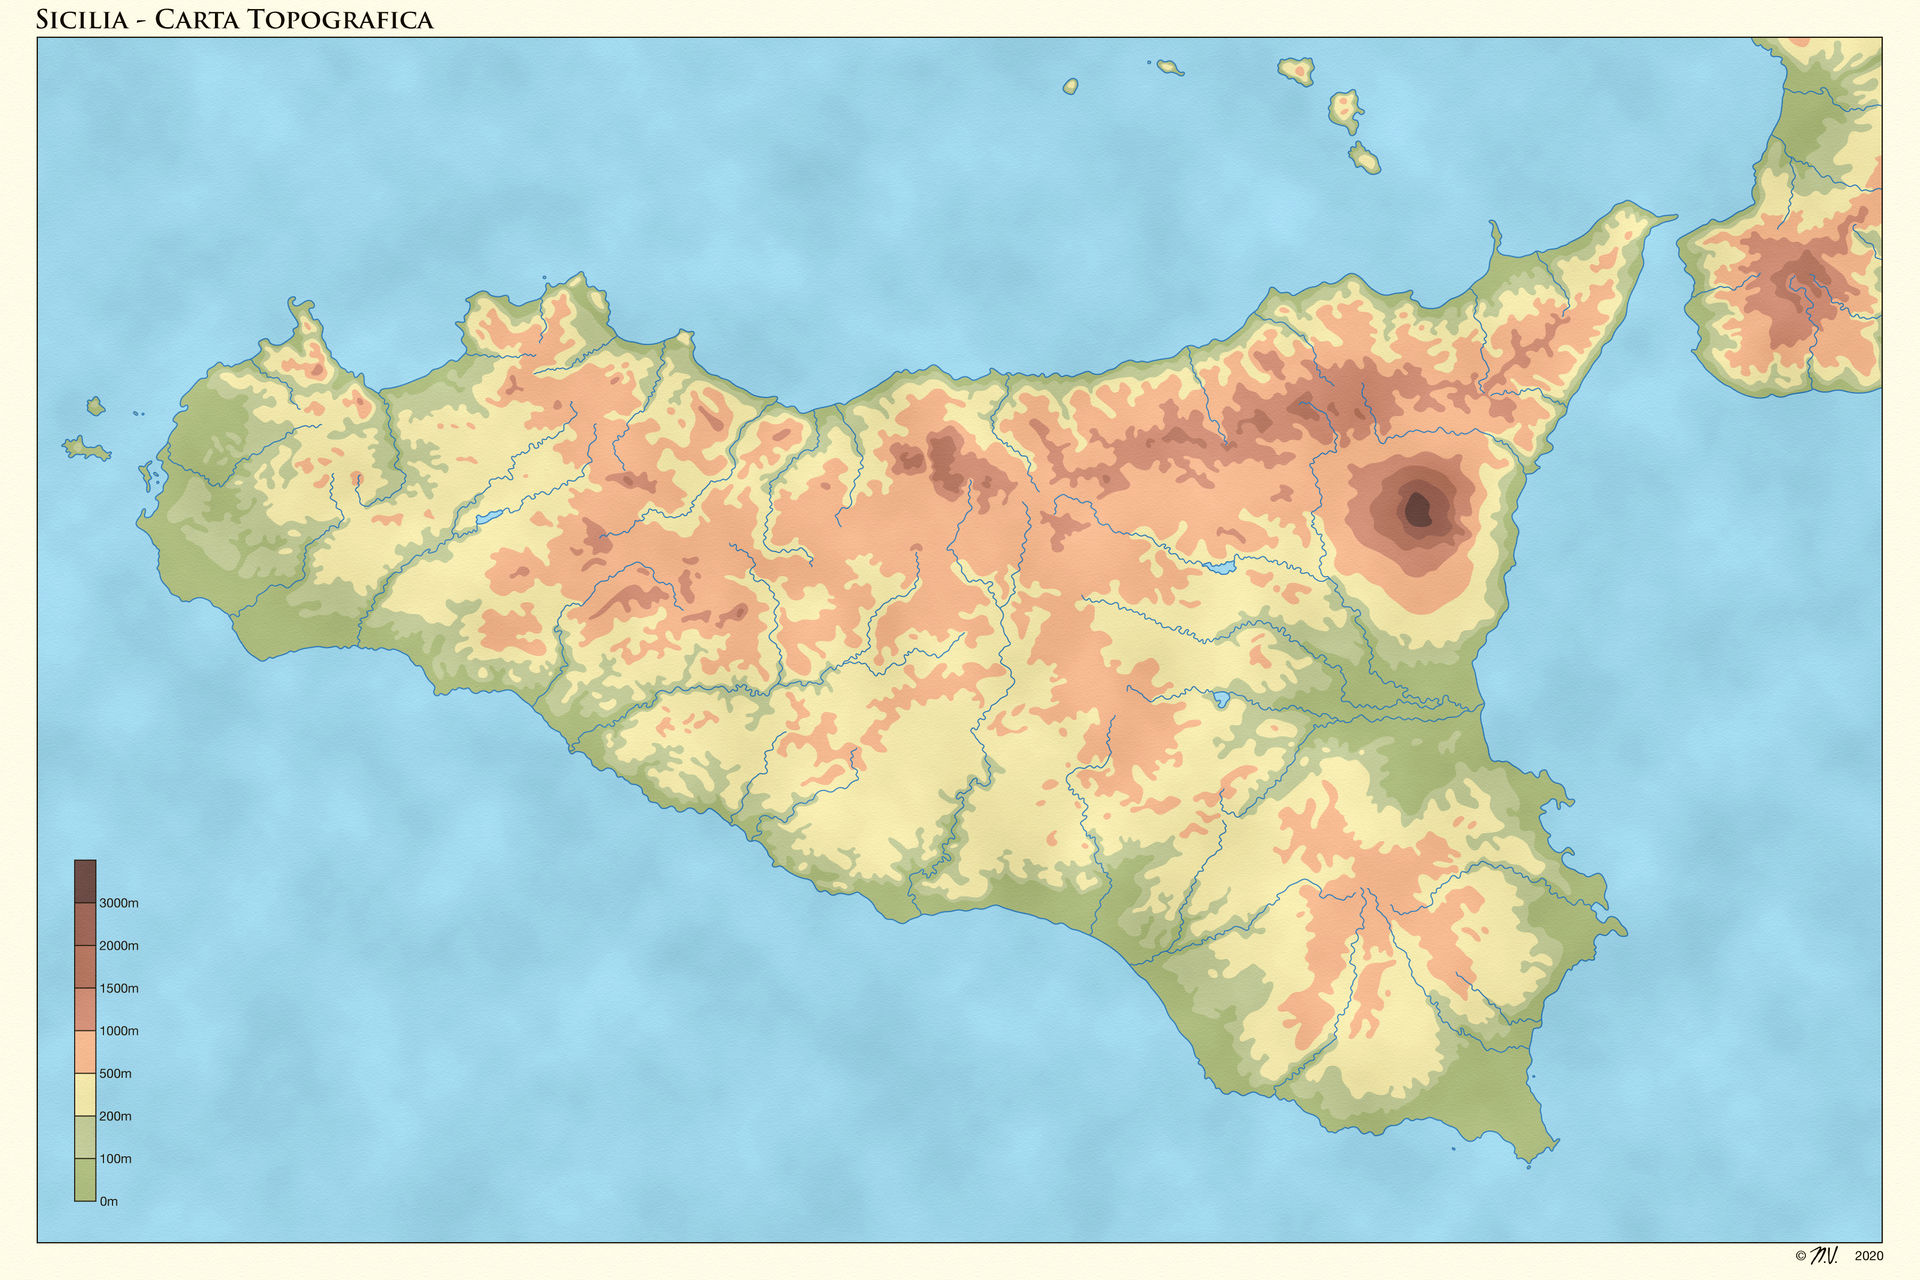 Sicilia (Carta Topografica) by Undevicesimus on DeviantArt